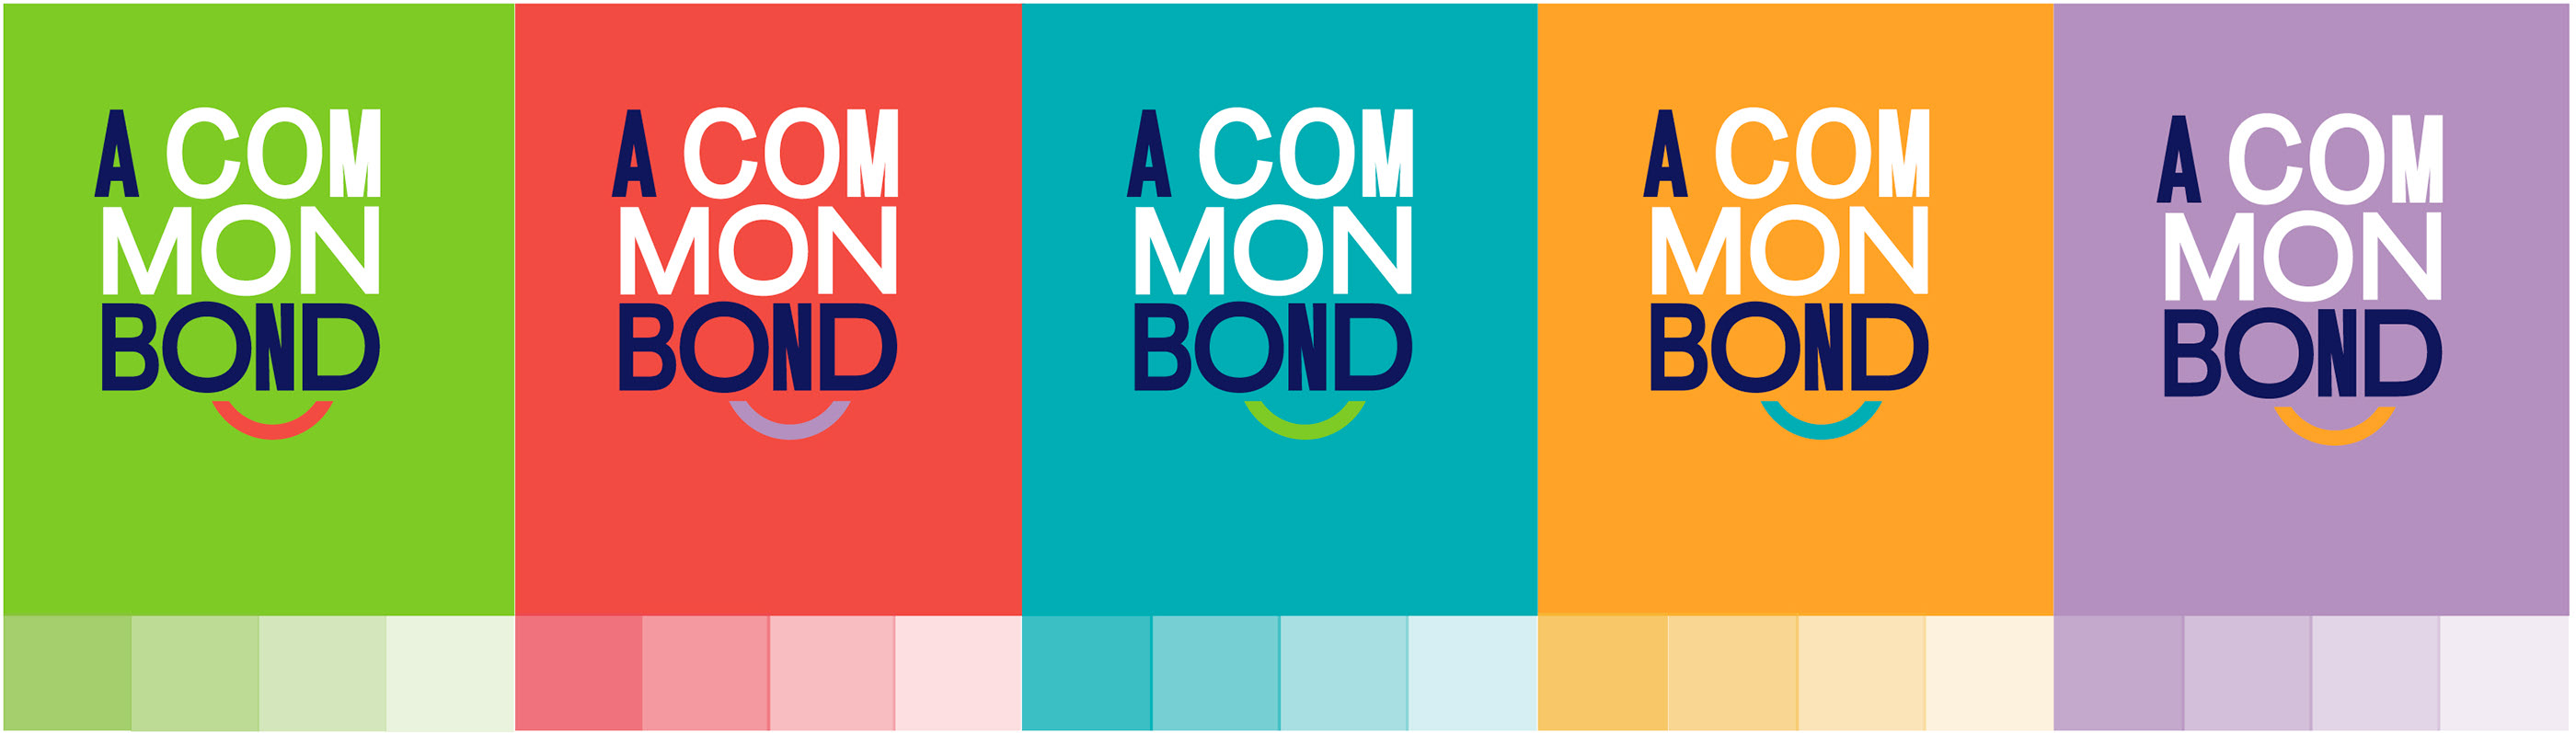 commonbond-07